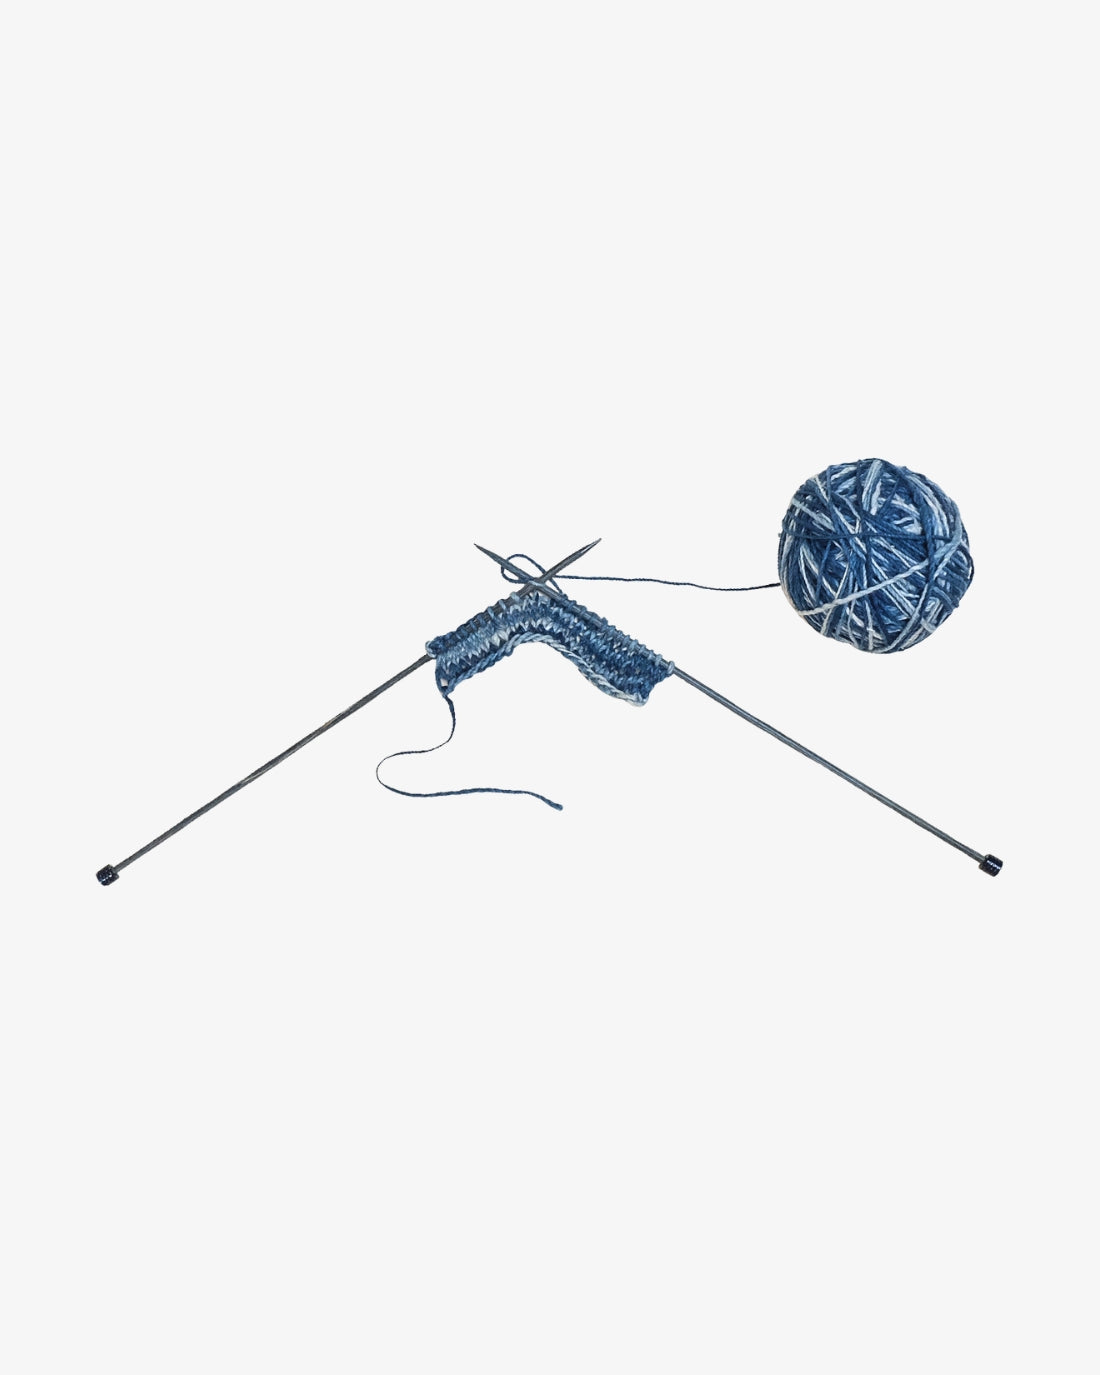 10″ Straight Knitting Needle Set by Lykke